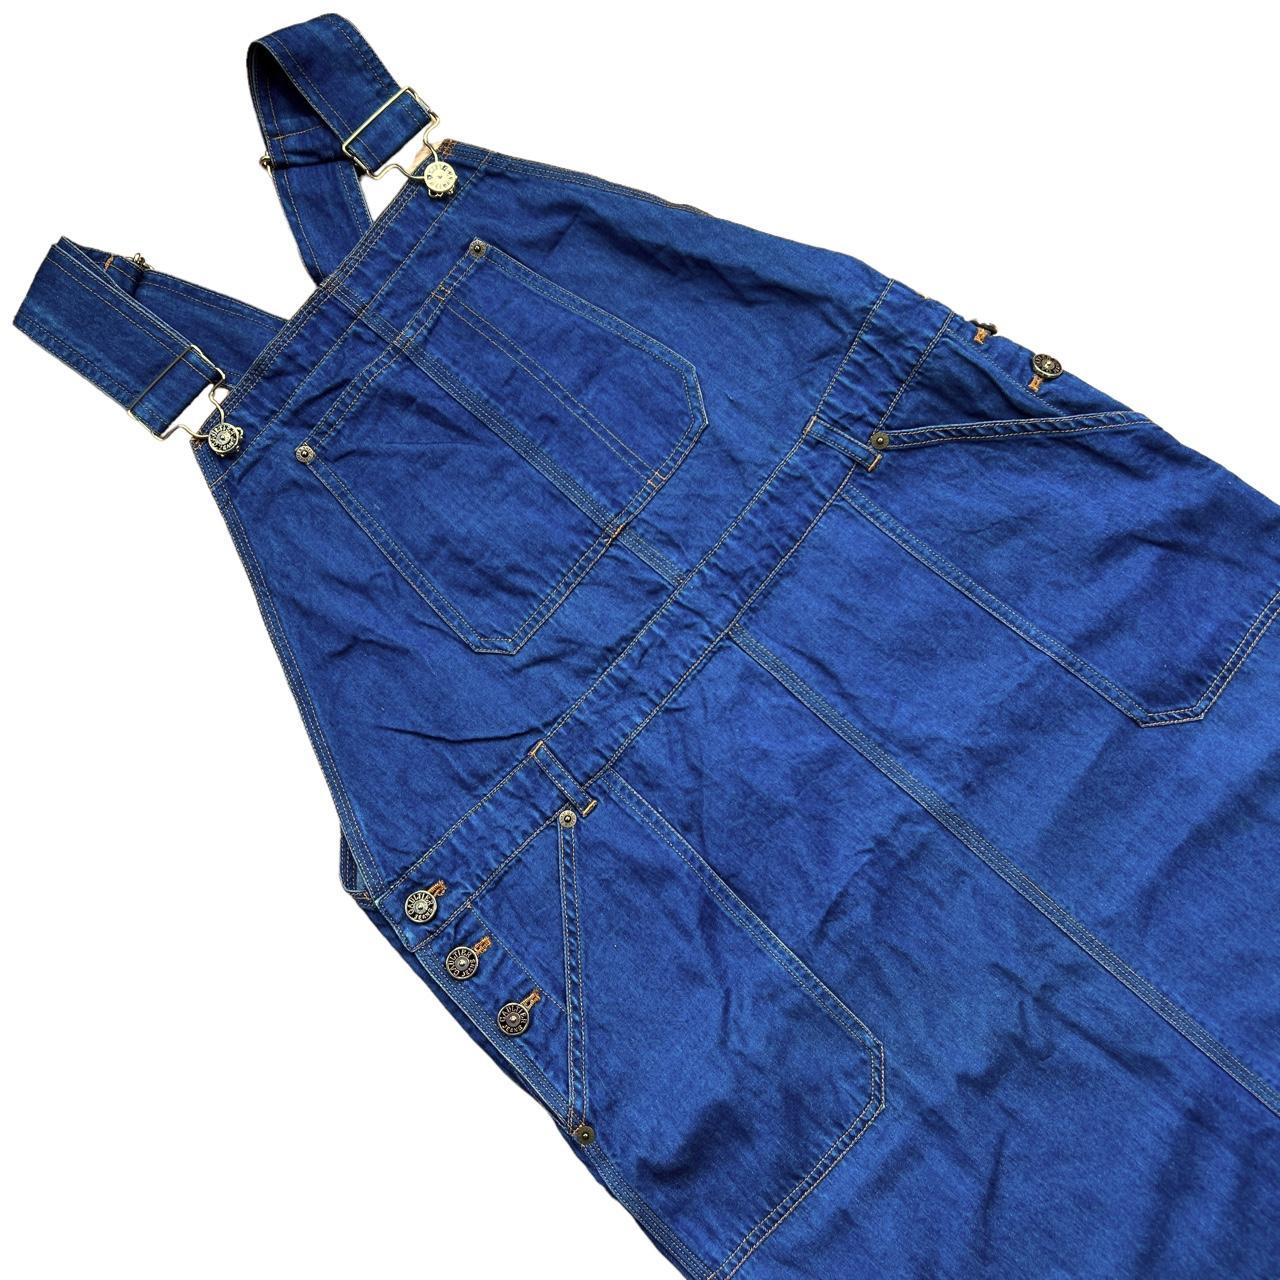 Gaultier Jeans Women's Blue and Navy Dress (2)